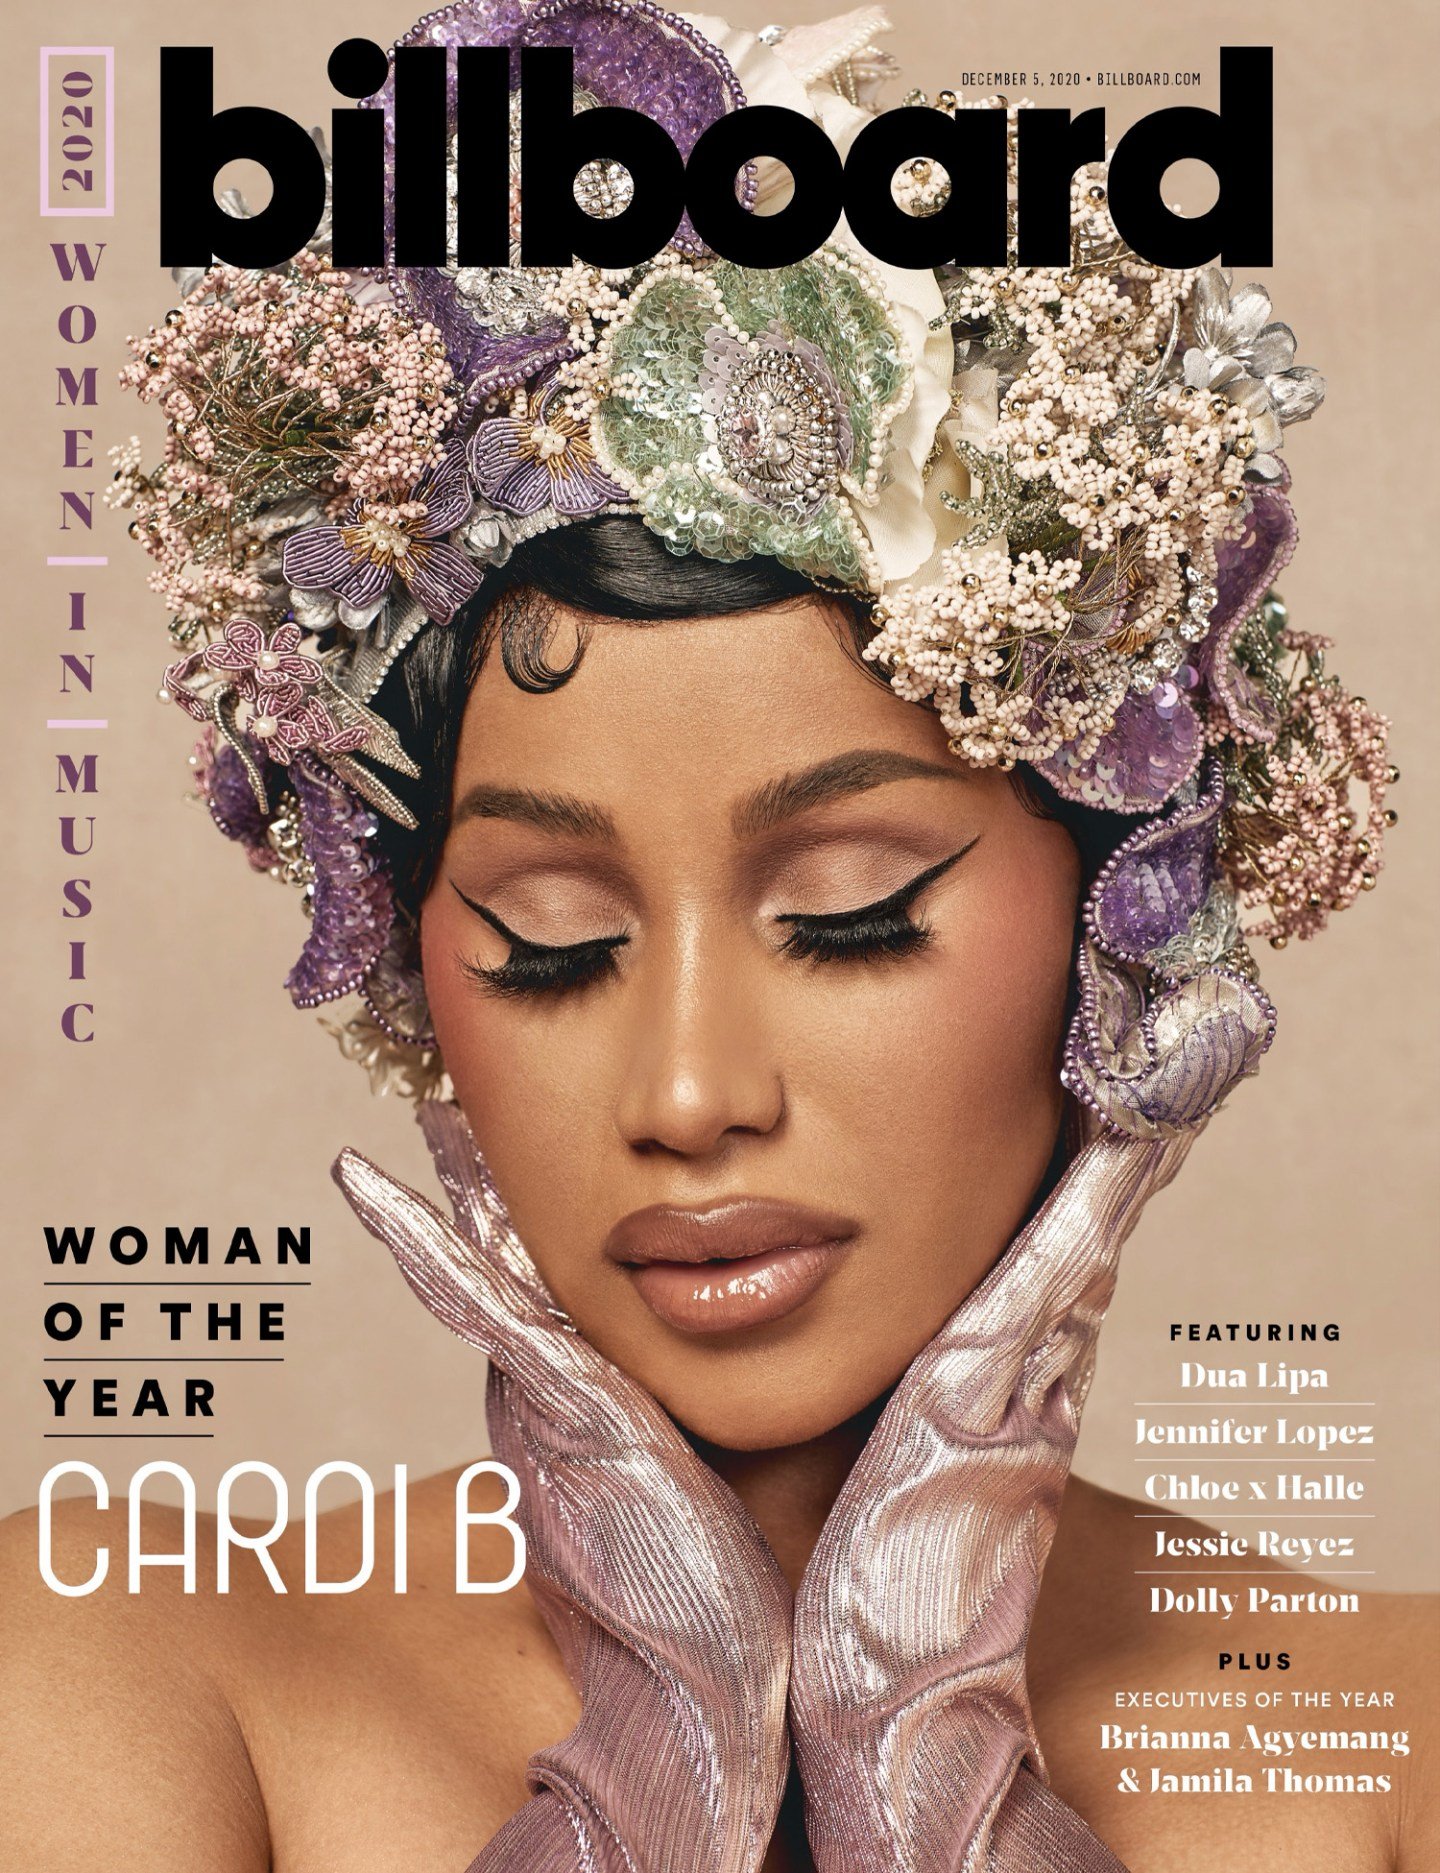 Carl Lamarre’s Billboard Woman of the Year Cardi B cover story, December 2020.